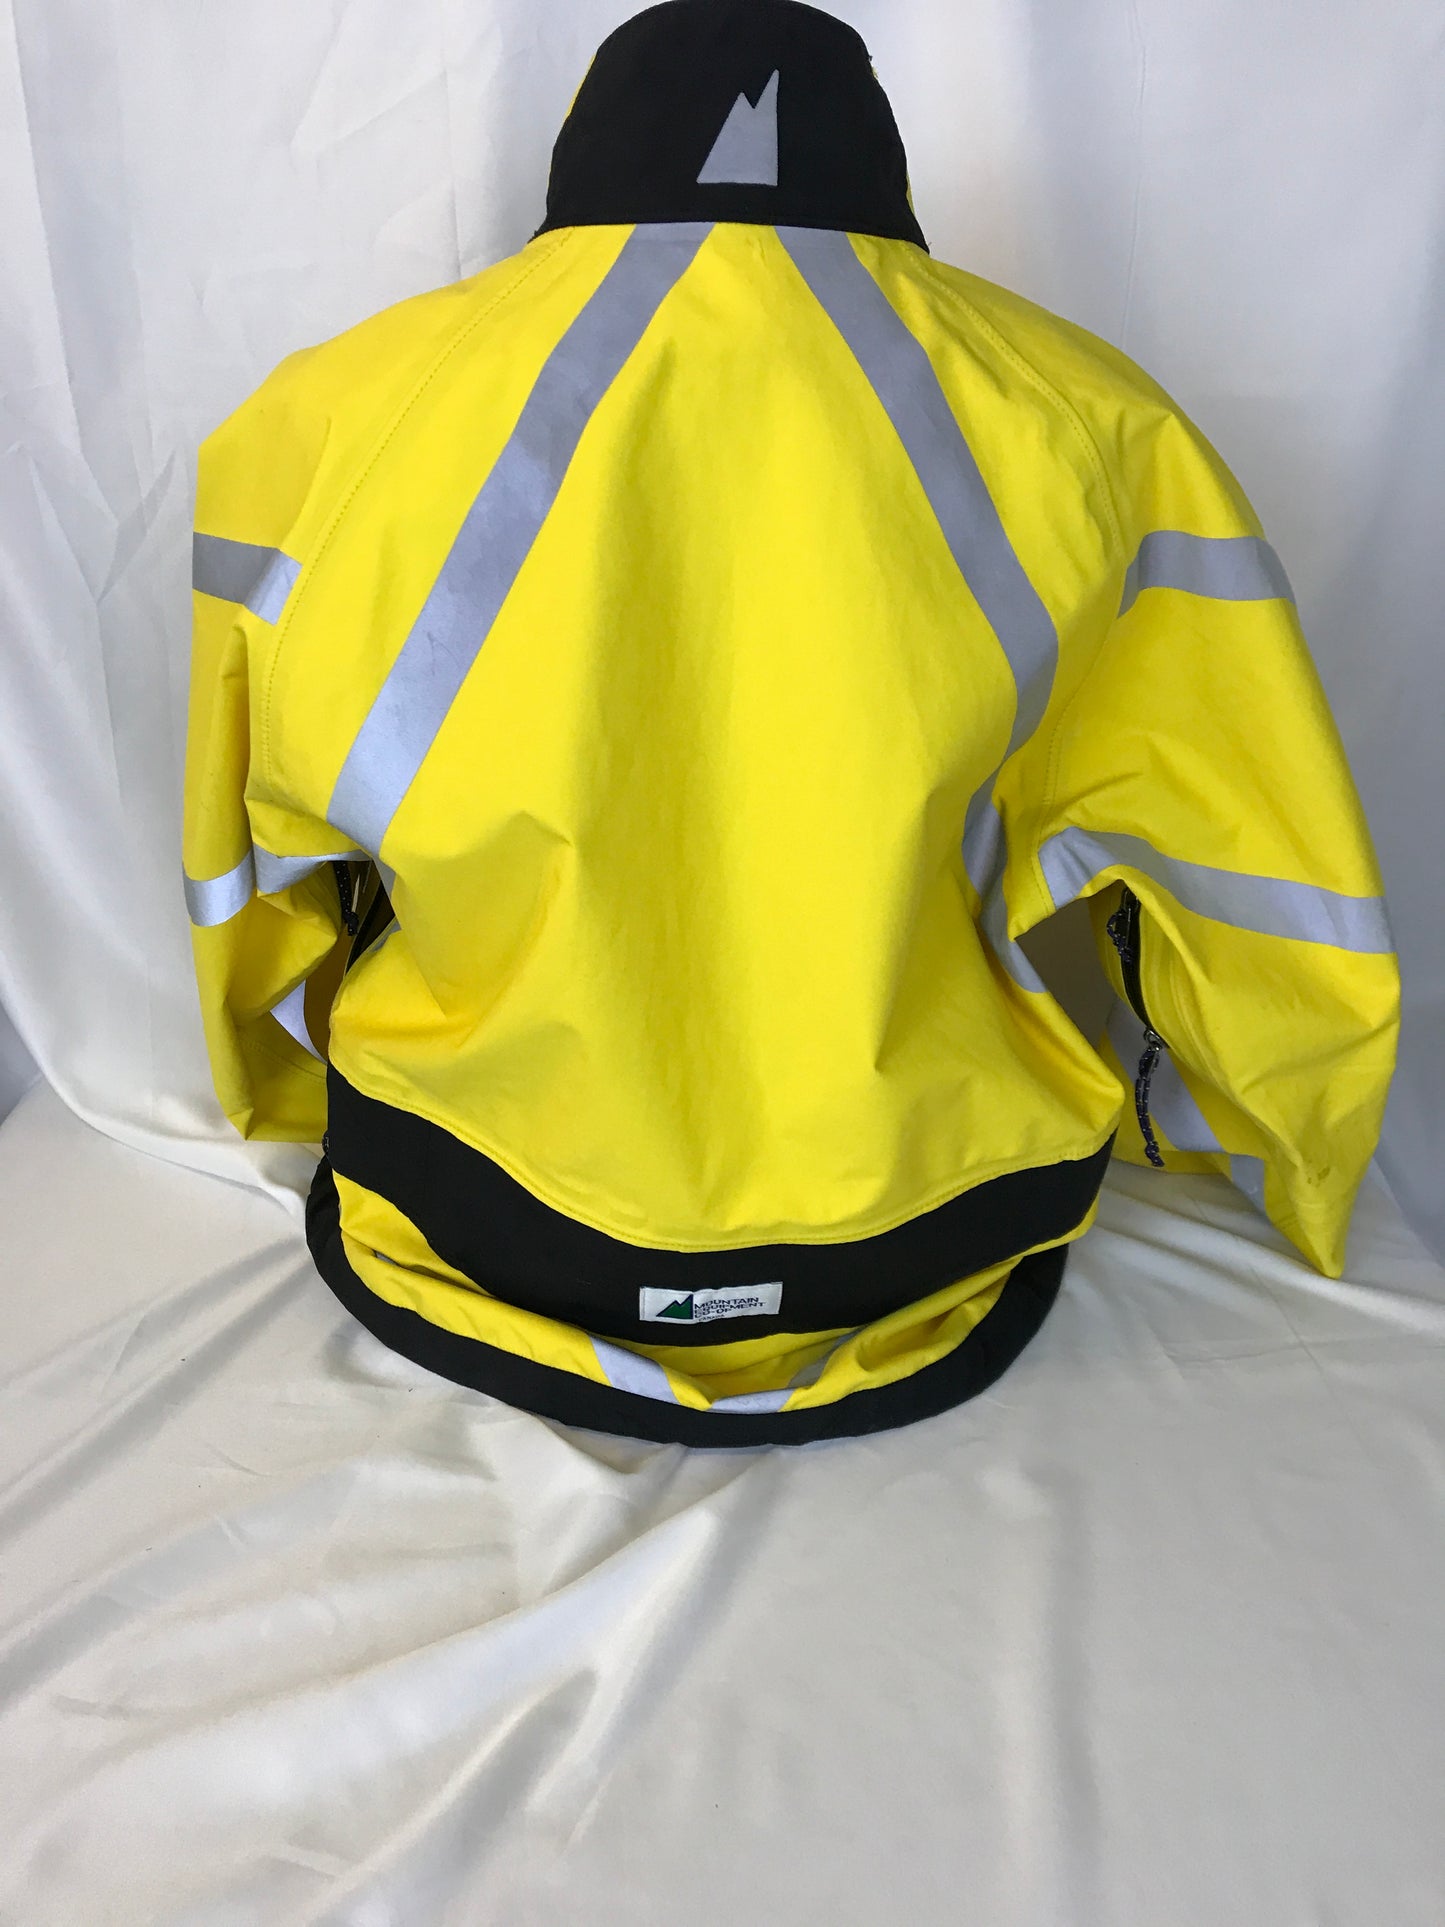 iMountain Equipment Co-op Size M Yellow Gore-Tex Jacket